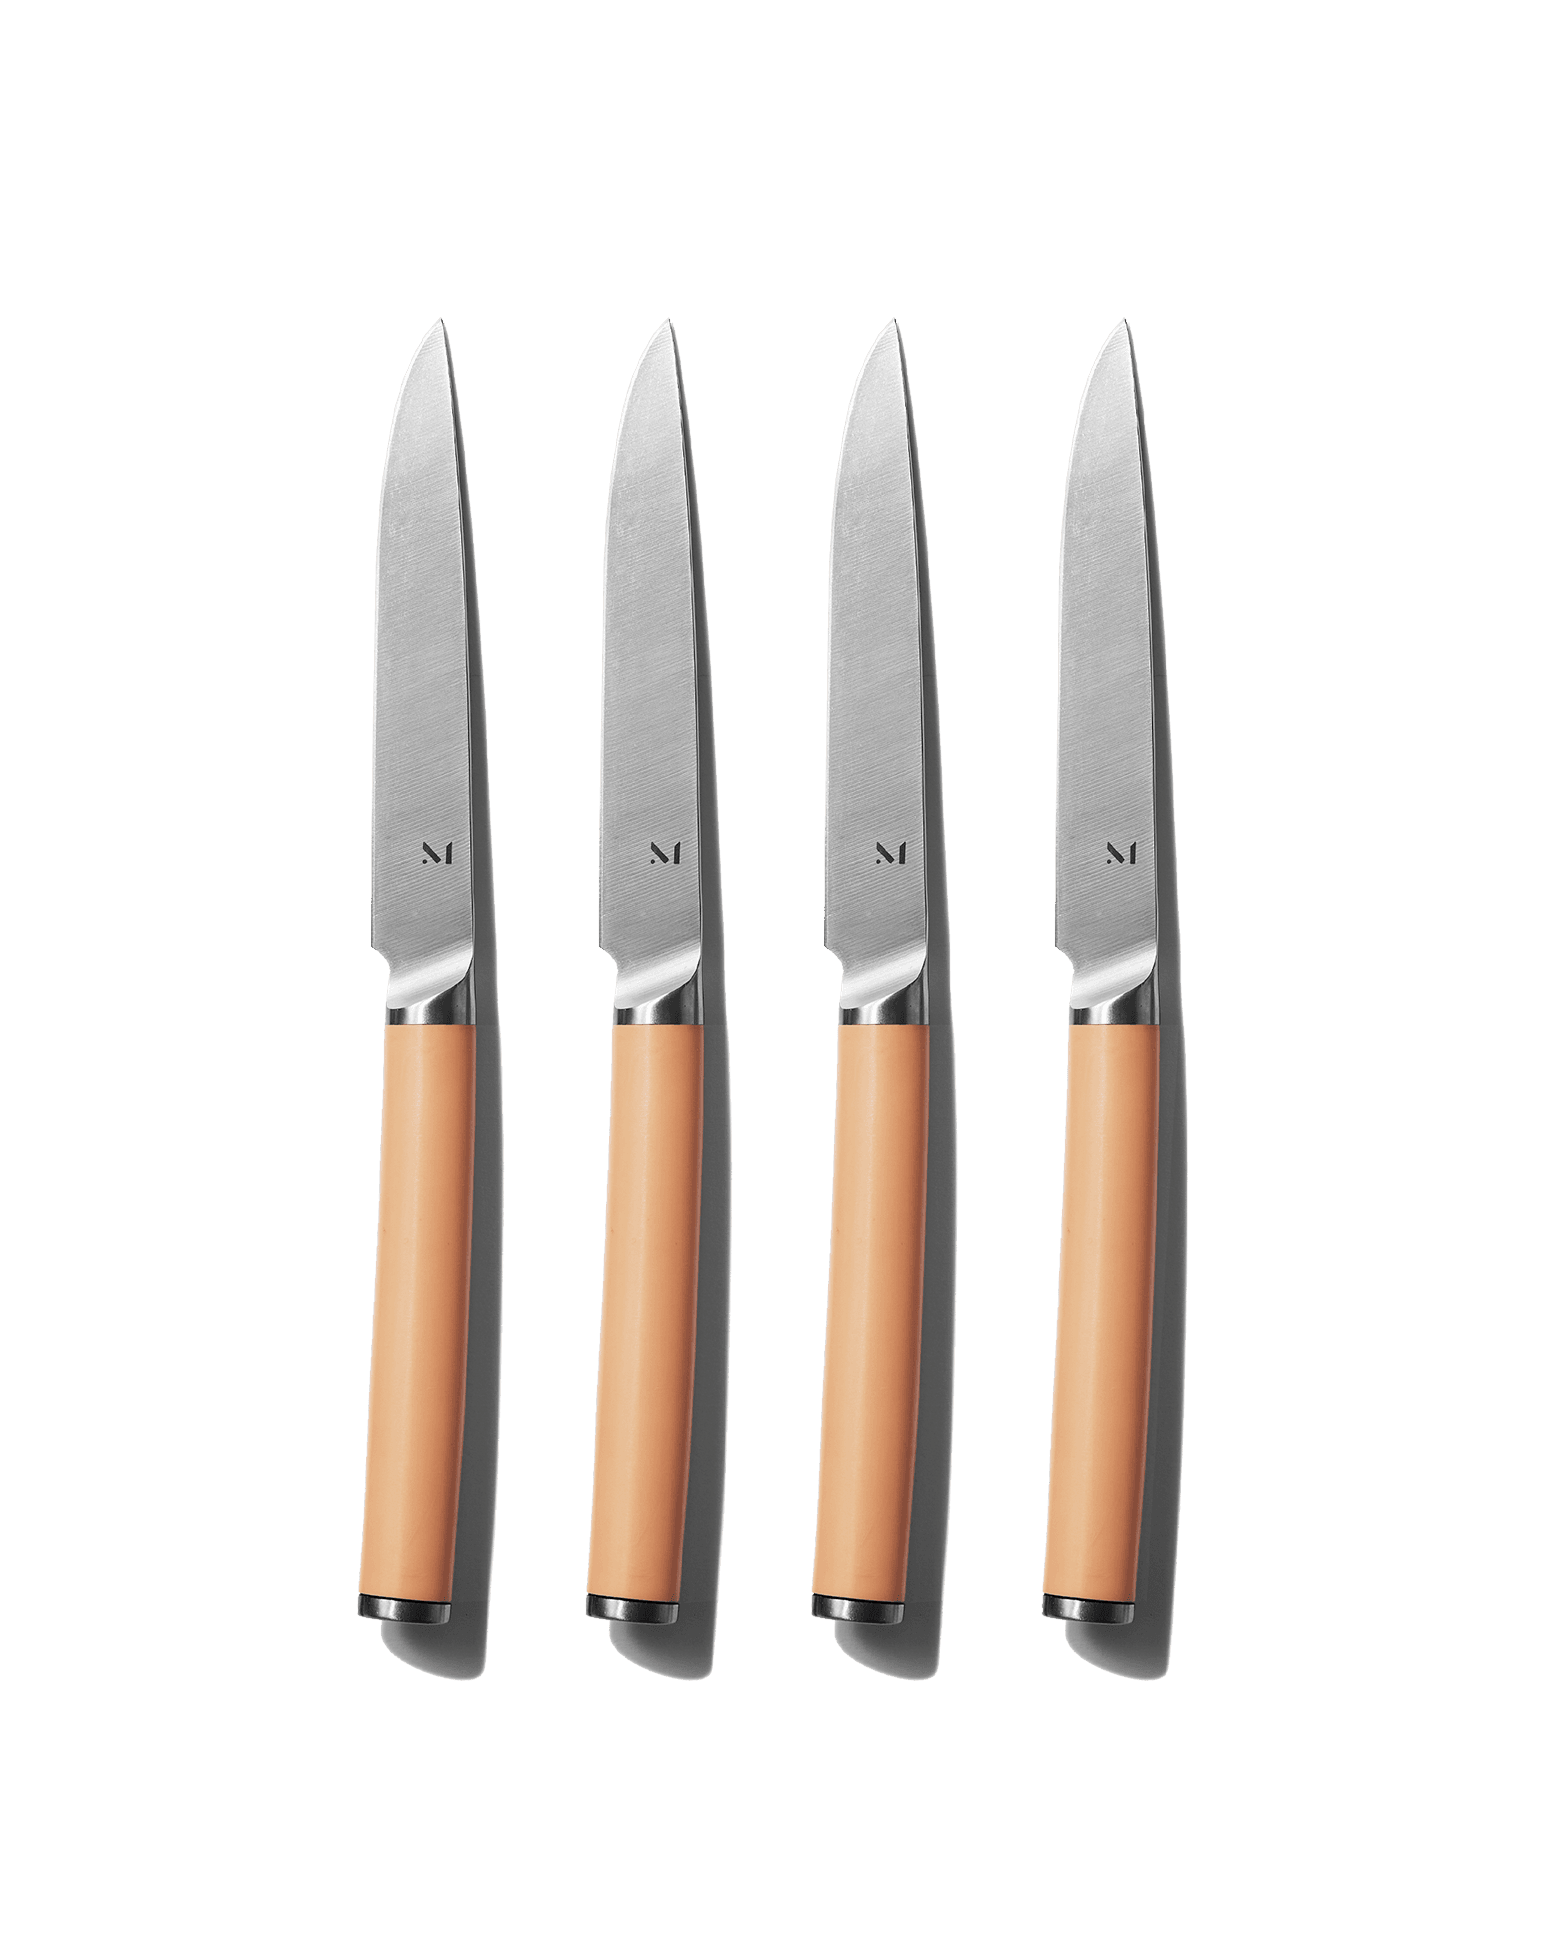 Kitchen Knives - Super Sharp - Made in Germany - Beige Color